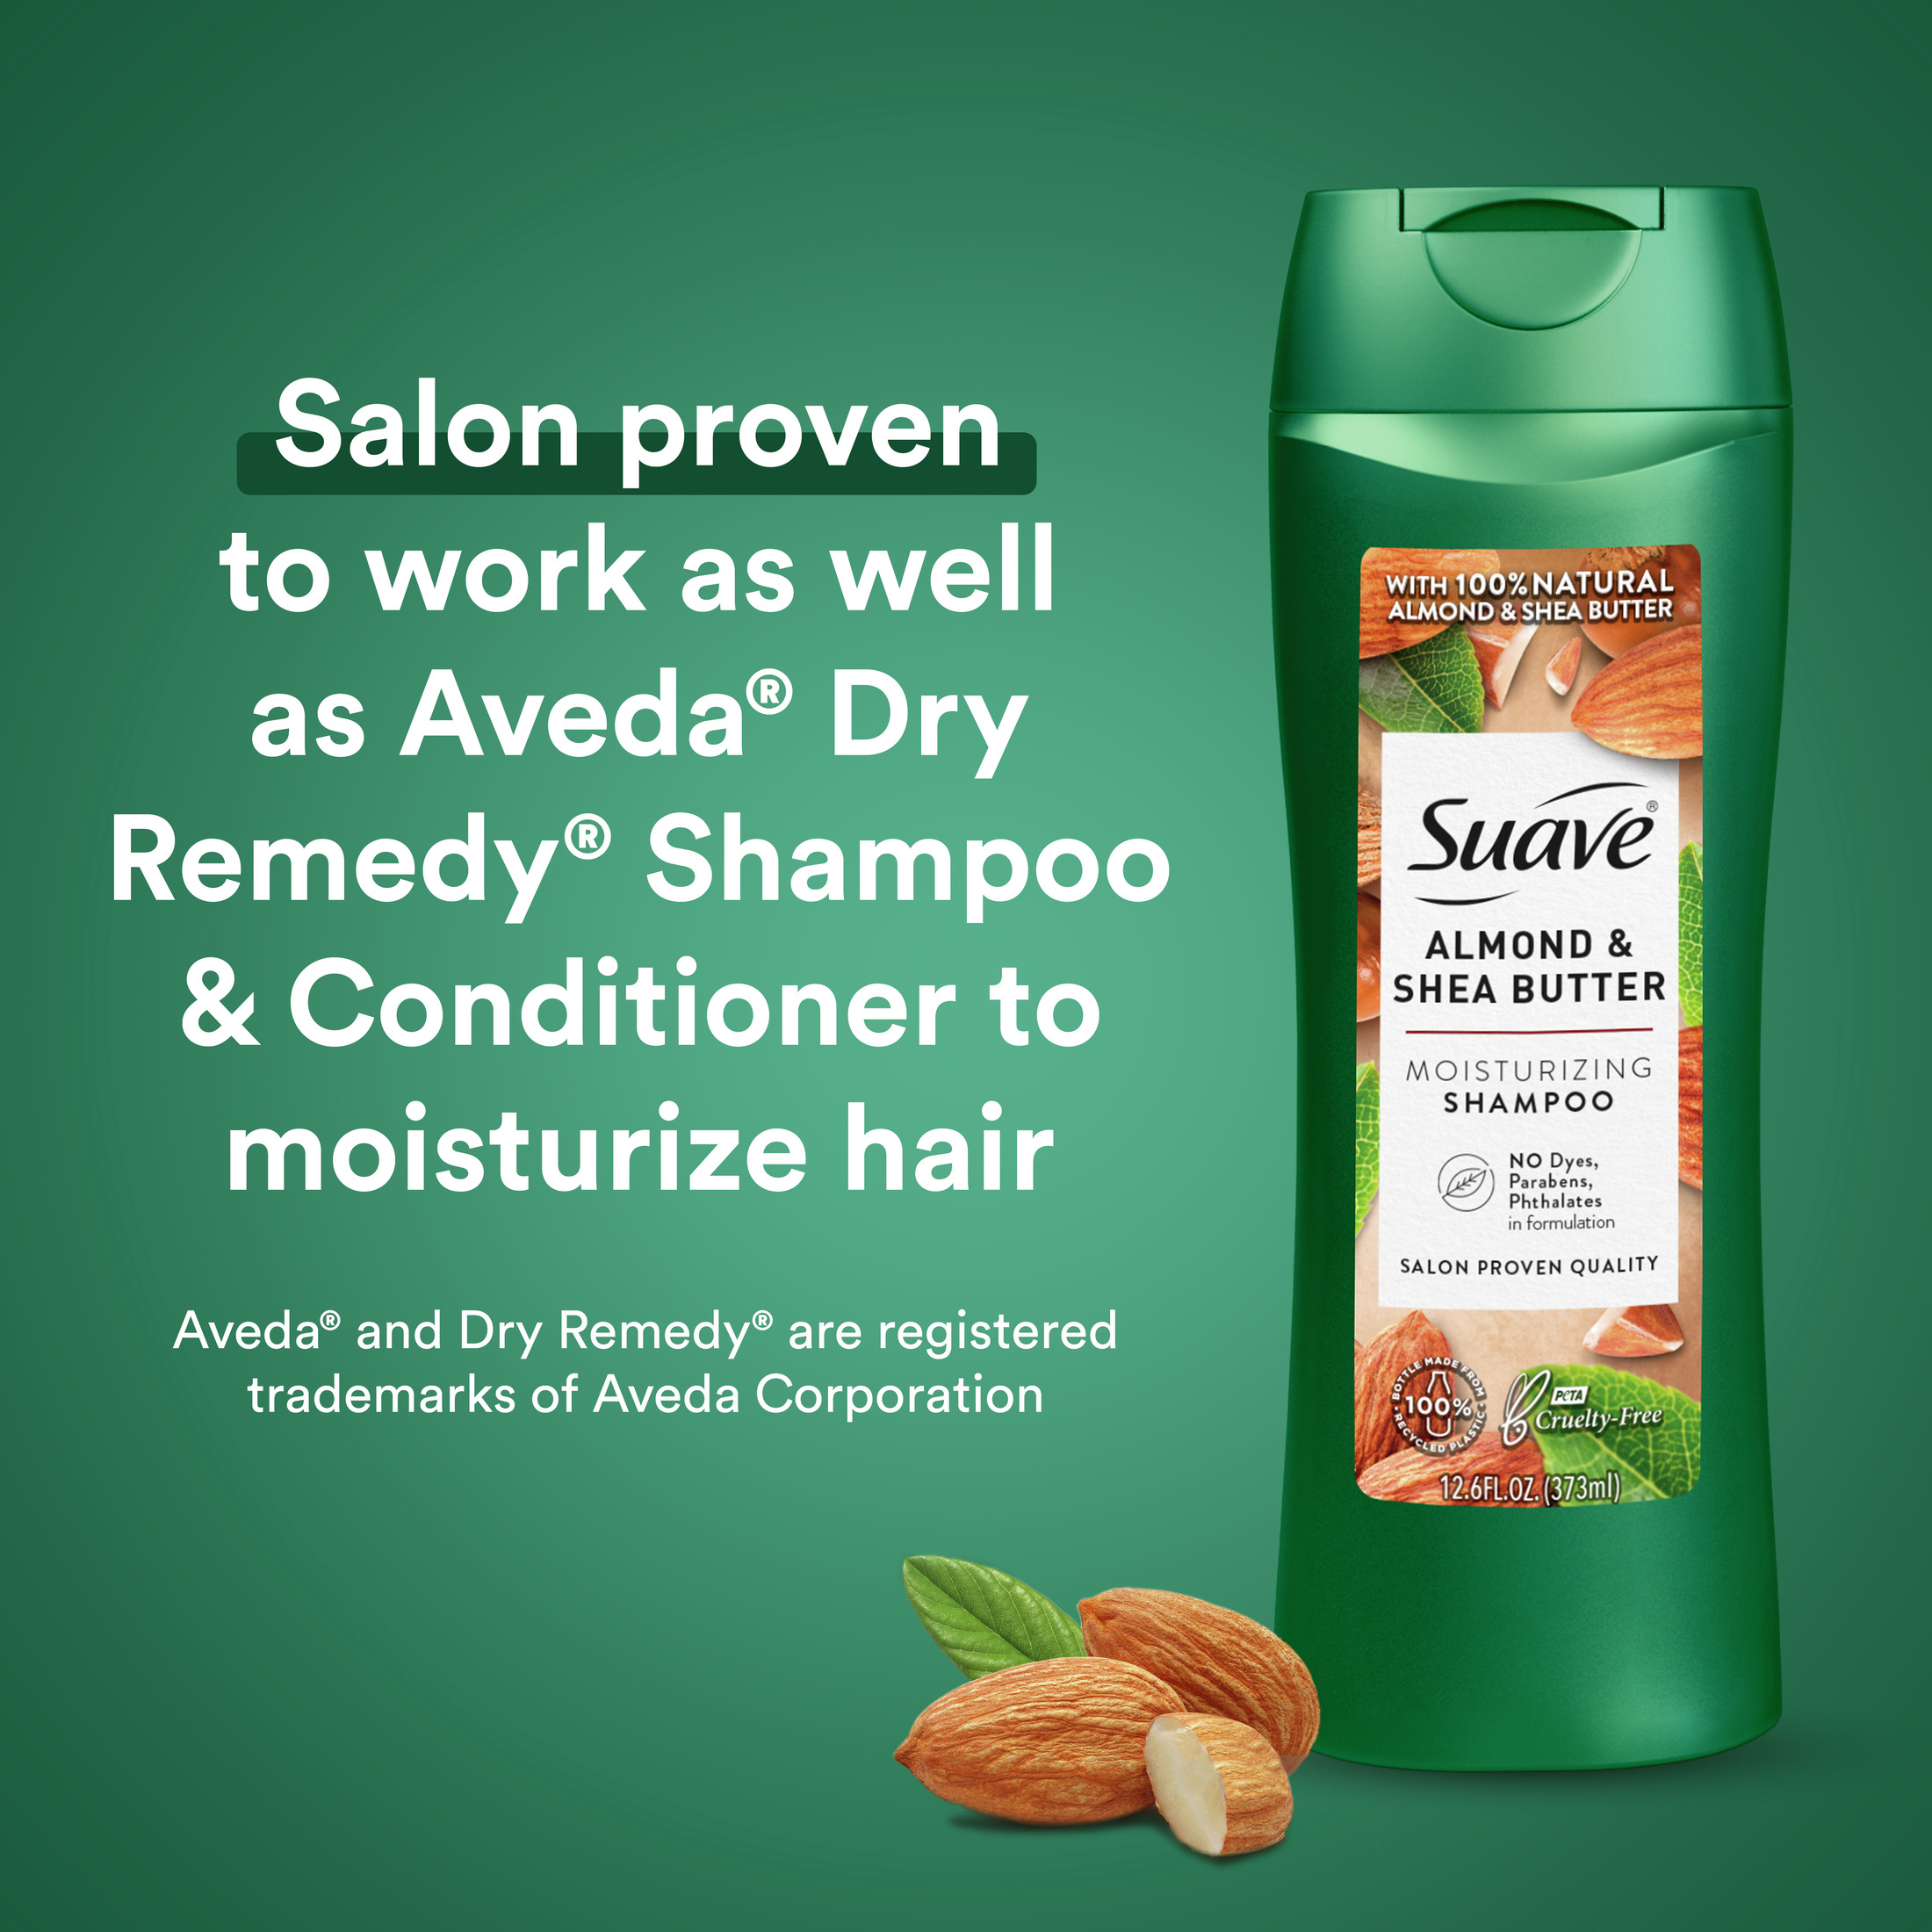 Suave Professional Moisturizing Shampoo, Almond & Shea Butter, 12.6 fl oz - image 5 of 11